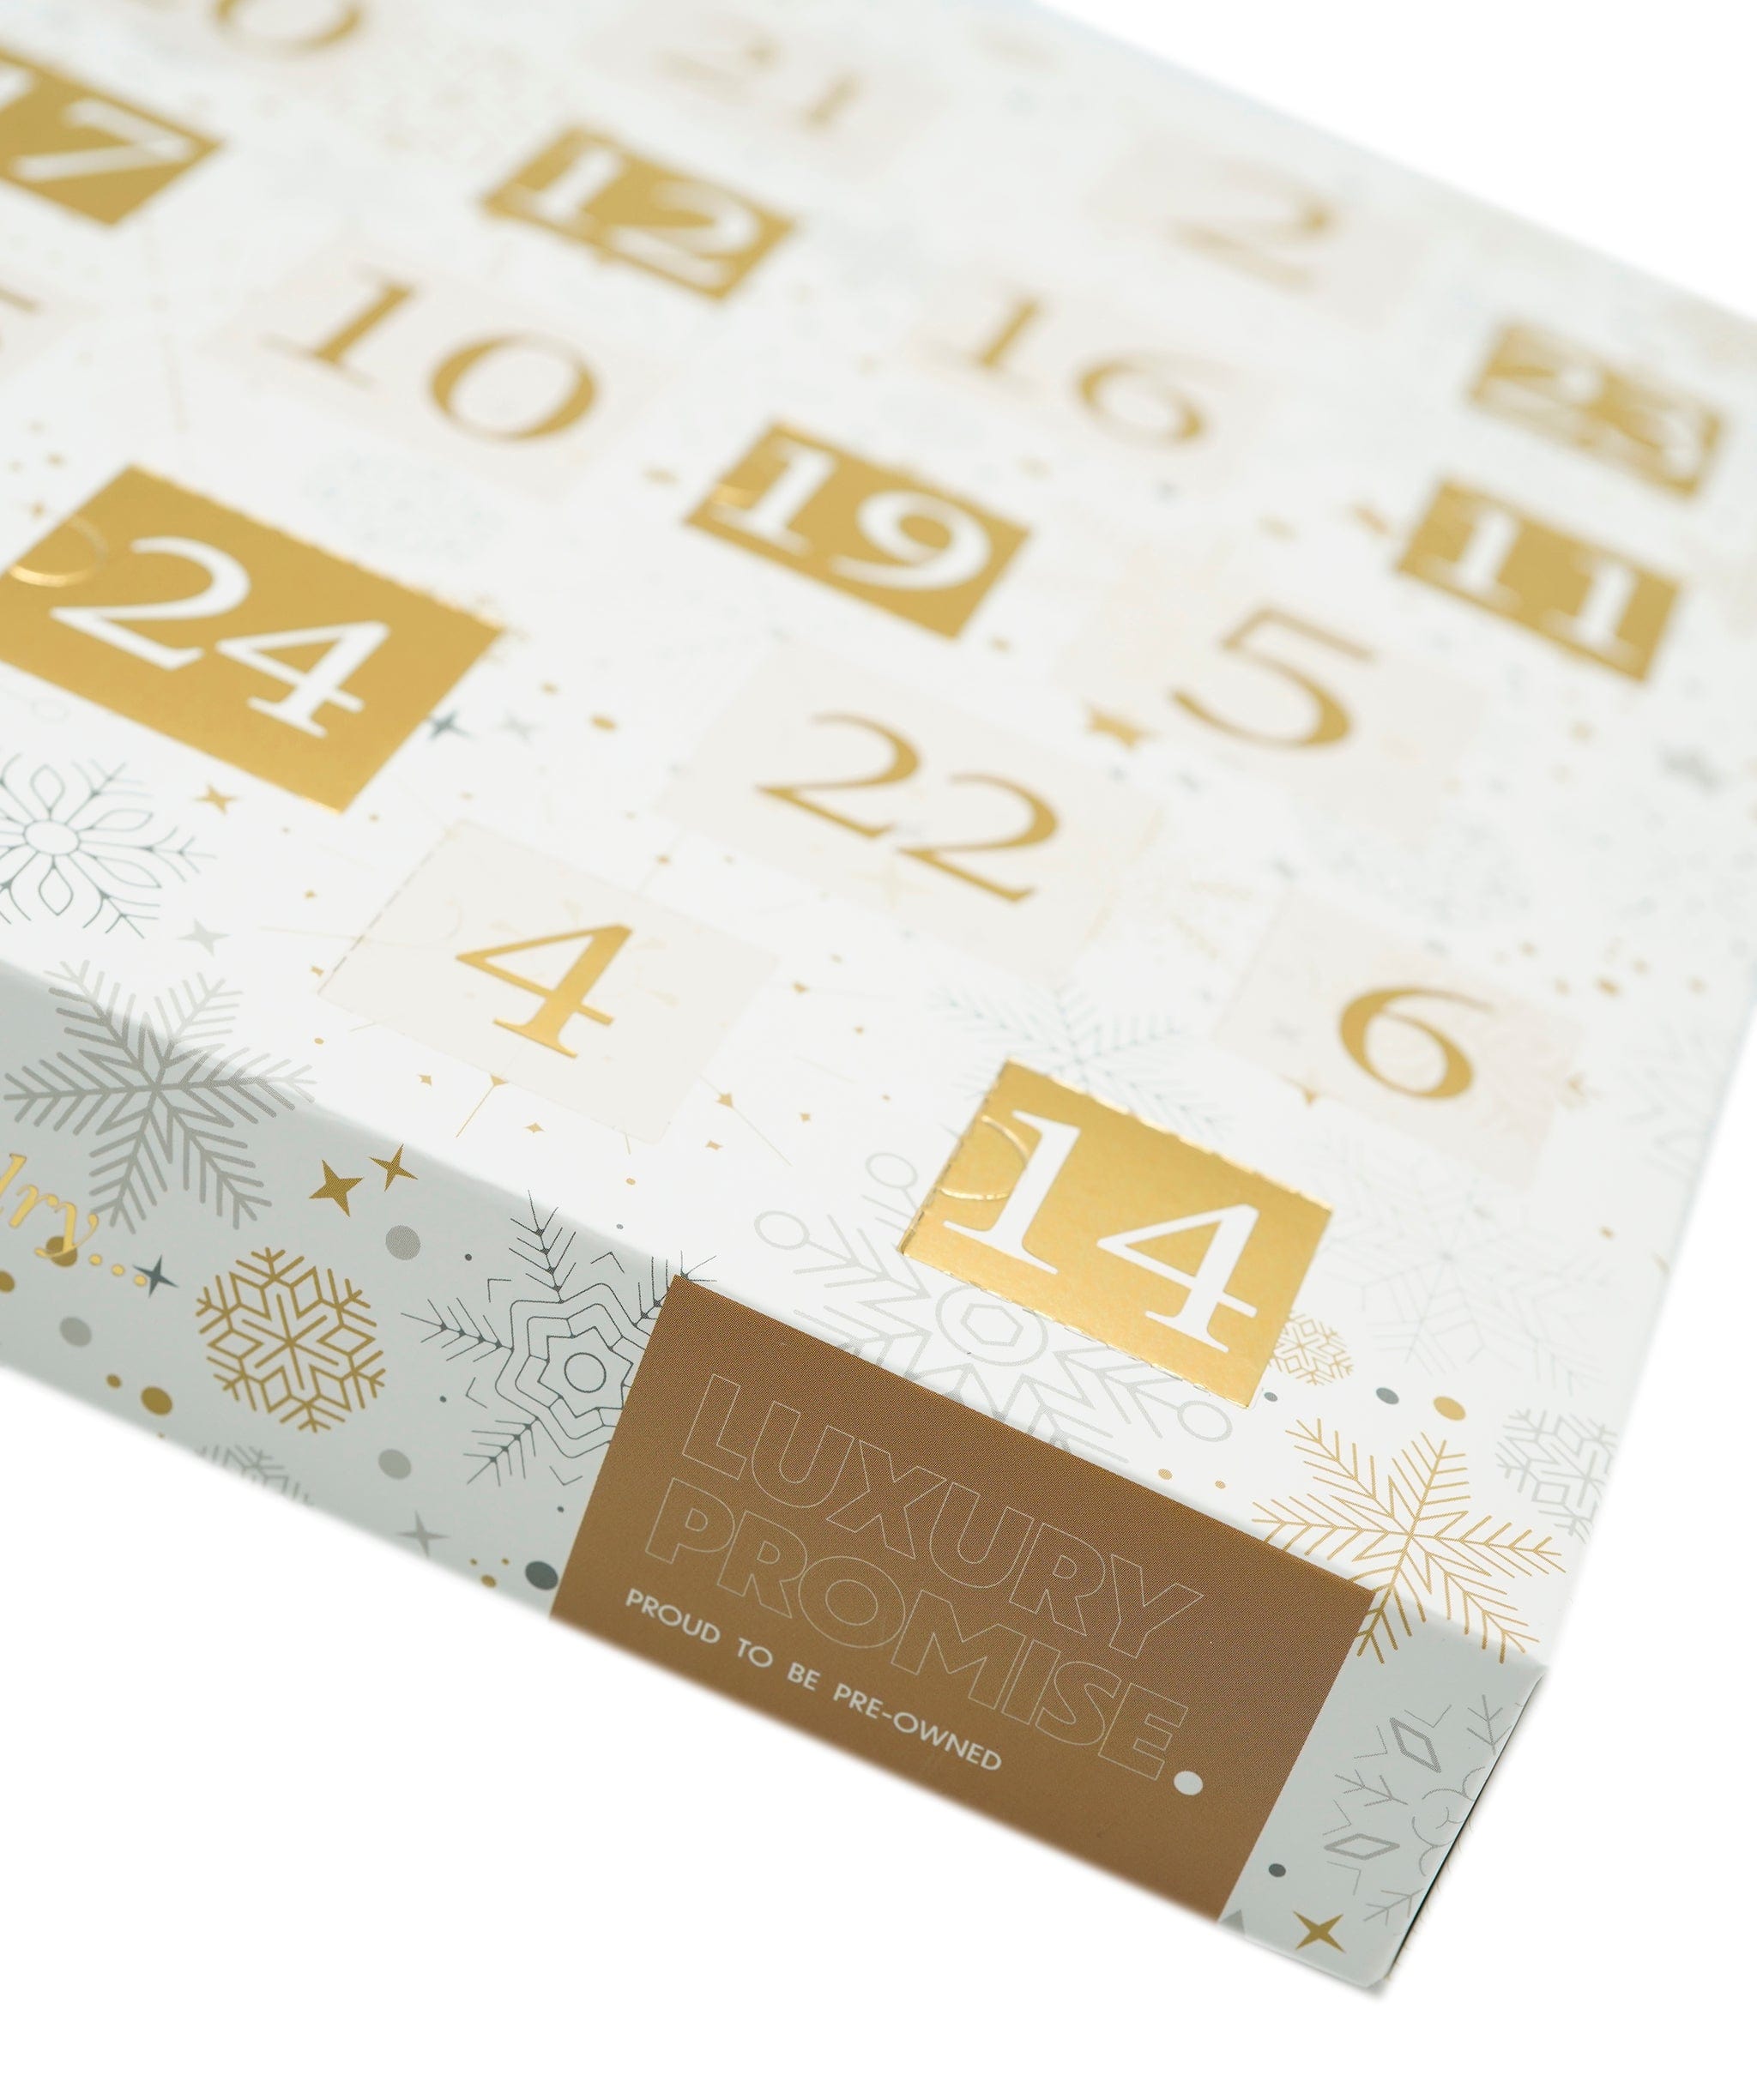 Luxury Promise LP Advent calendar